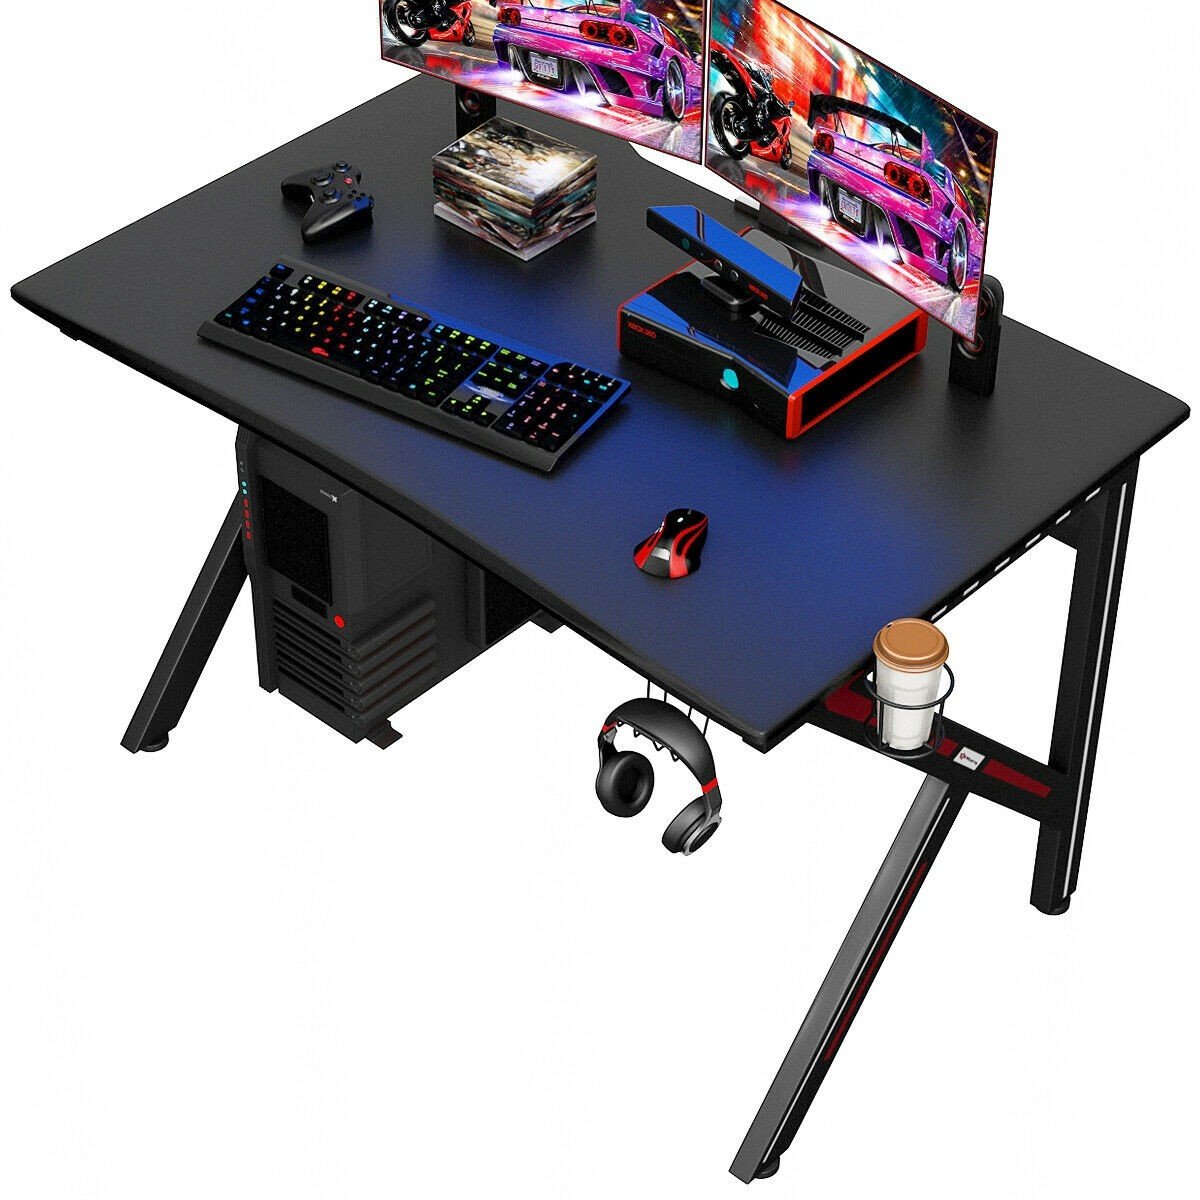 Gaming Desks - K-Shaped E-Sports Gaming Desk Gamers Computer Table